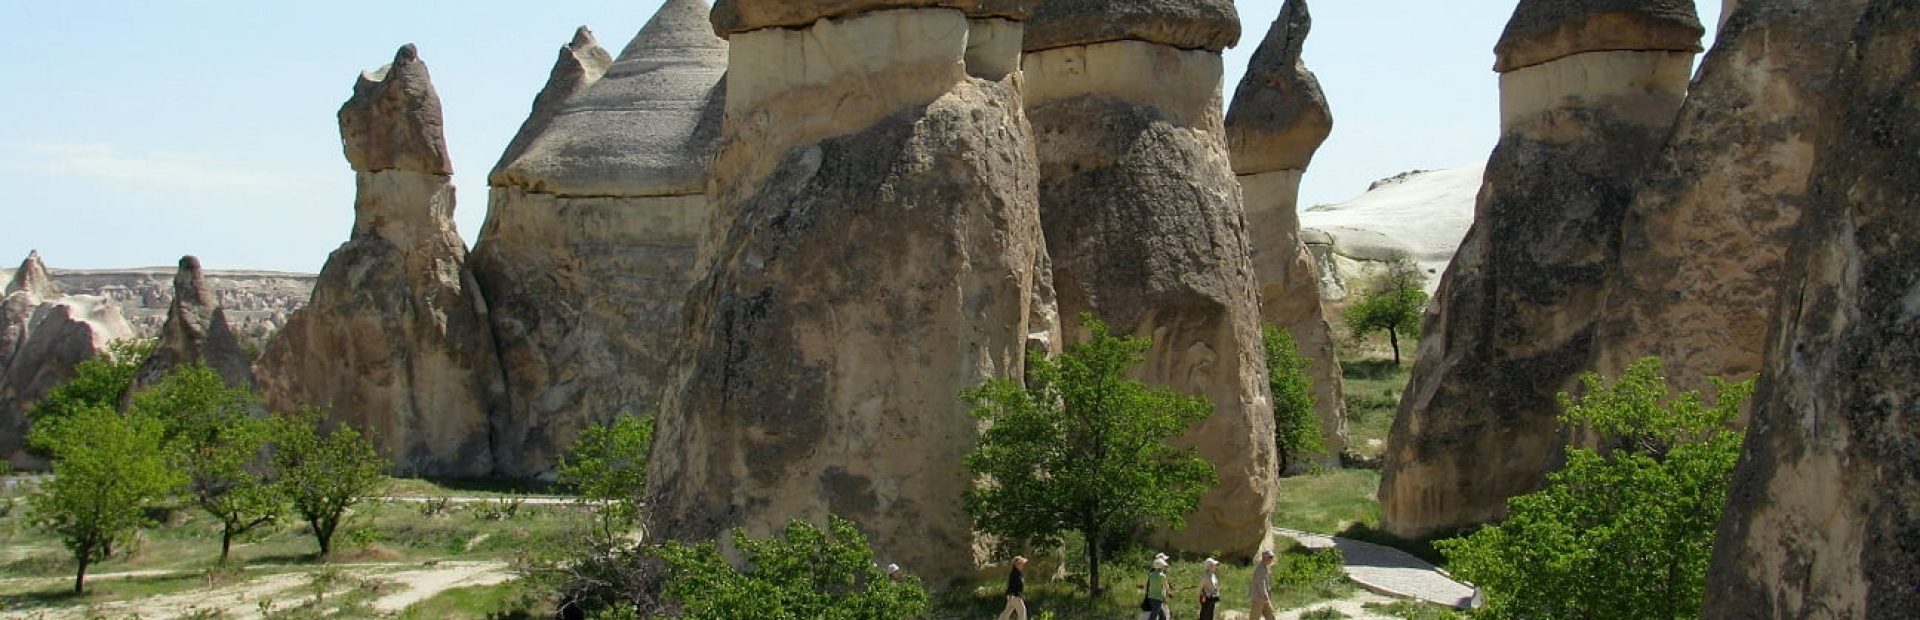 cappadocia-travel-glimpses-of-the-world